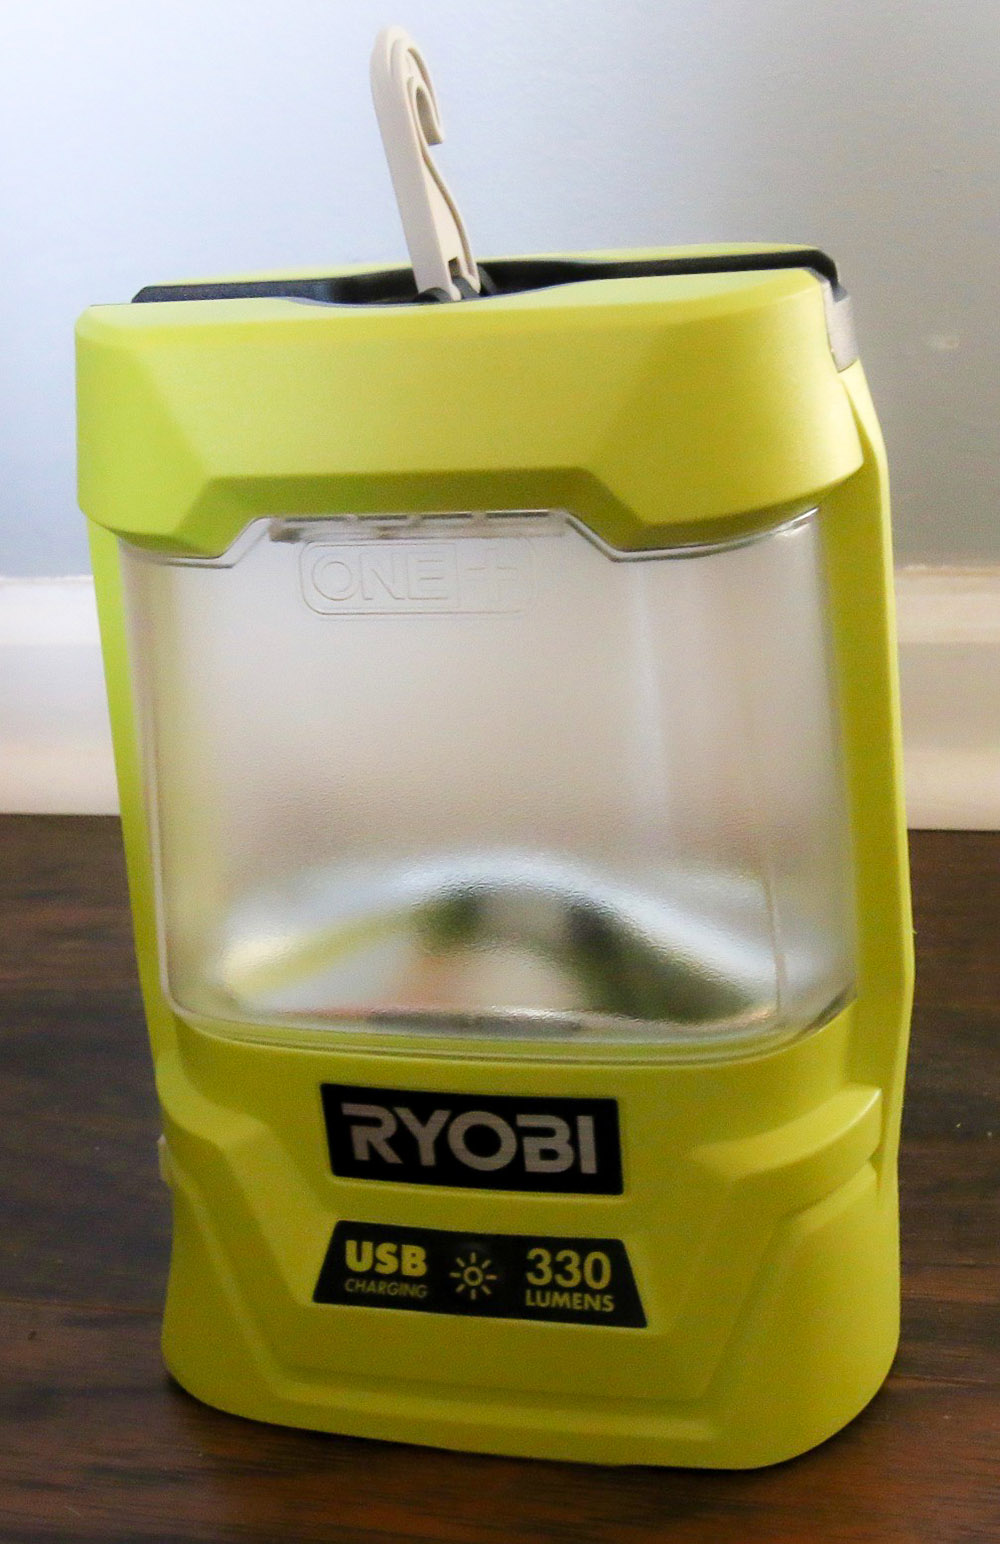 A Ryobi USB charging area light.